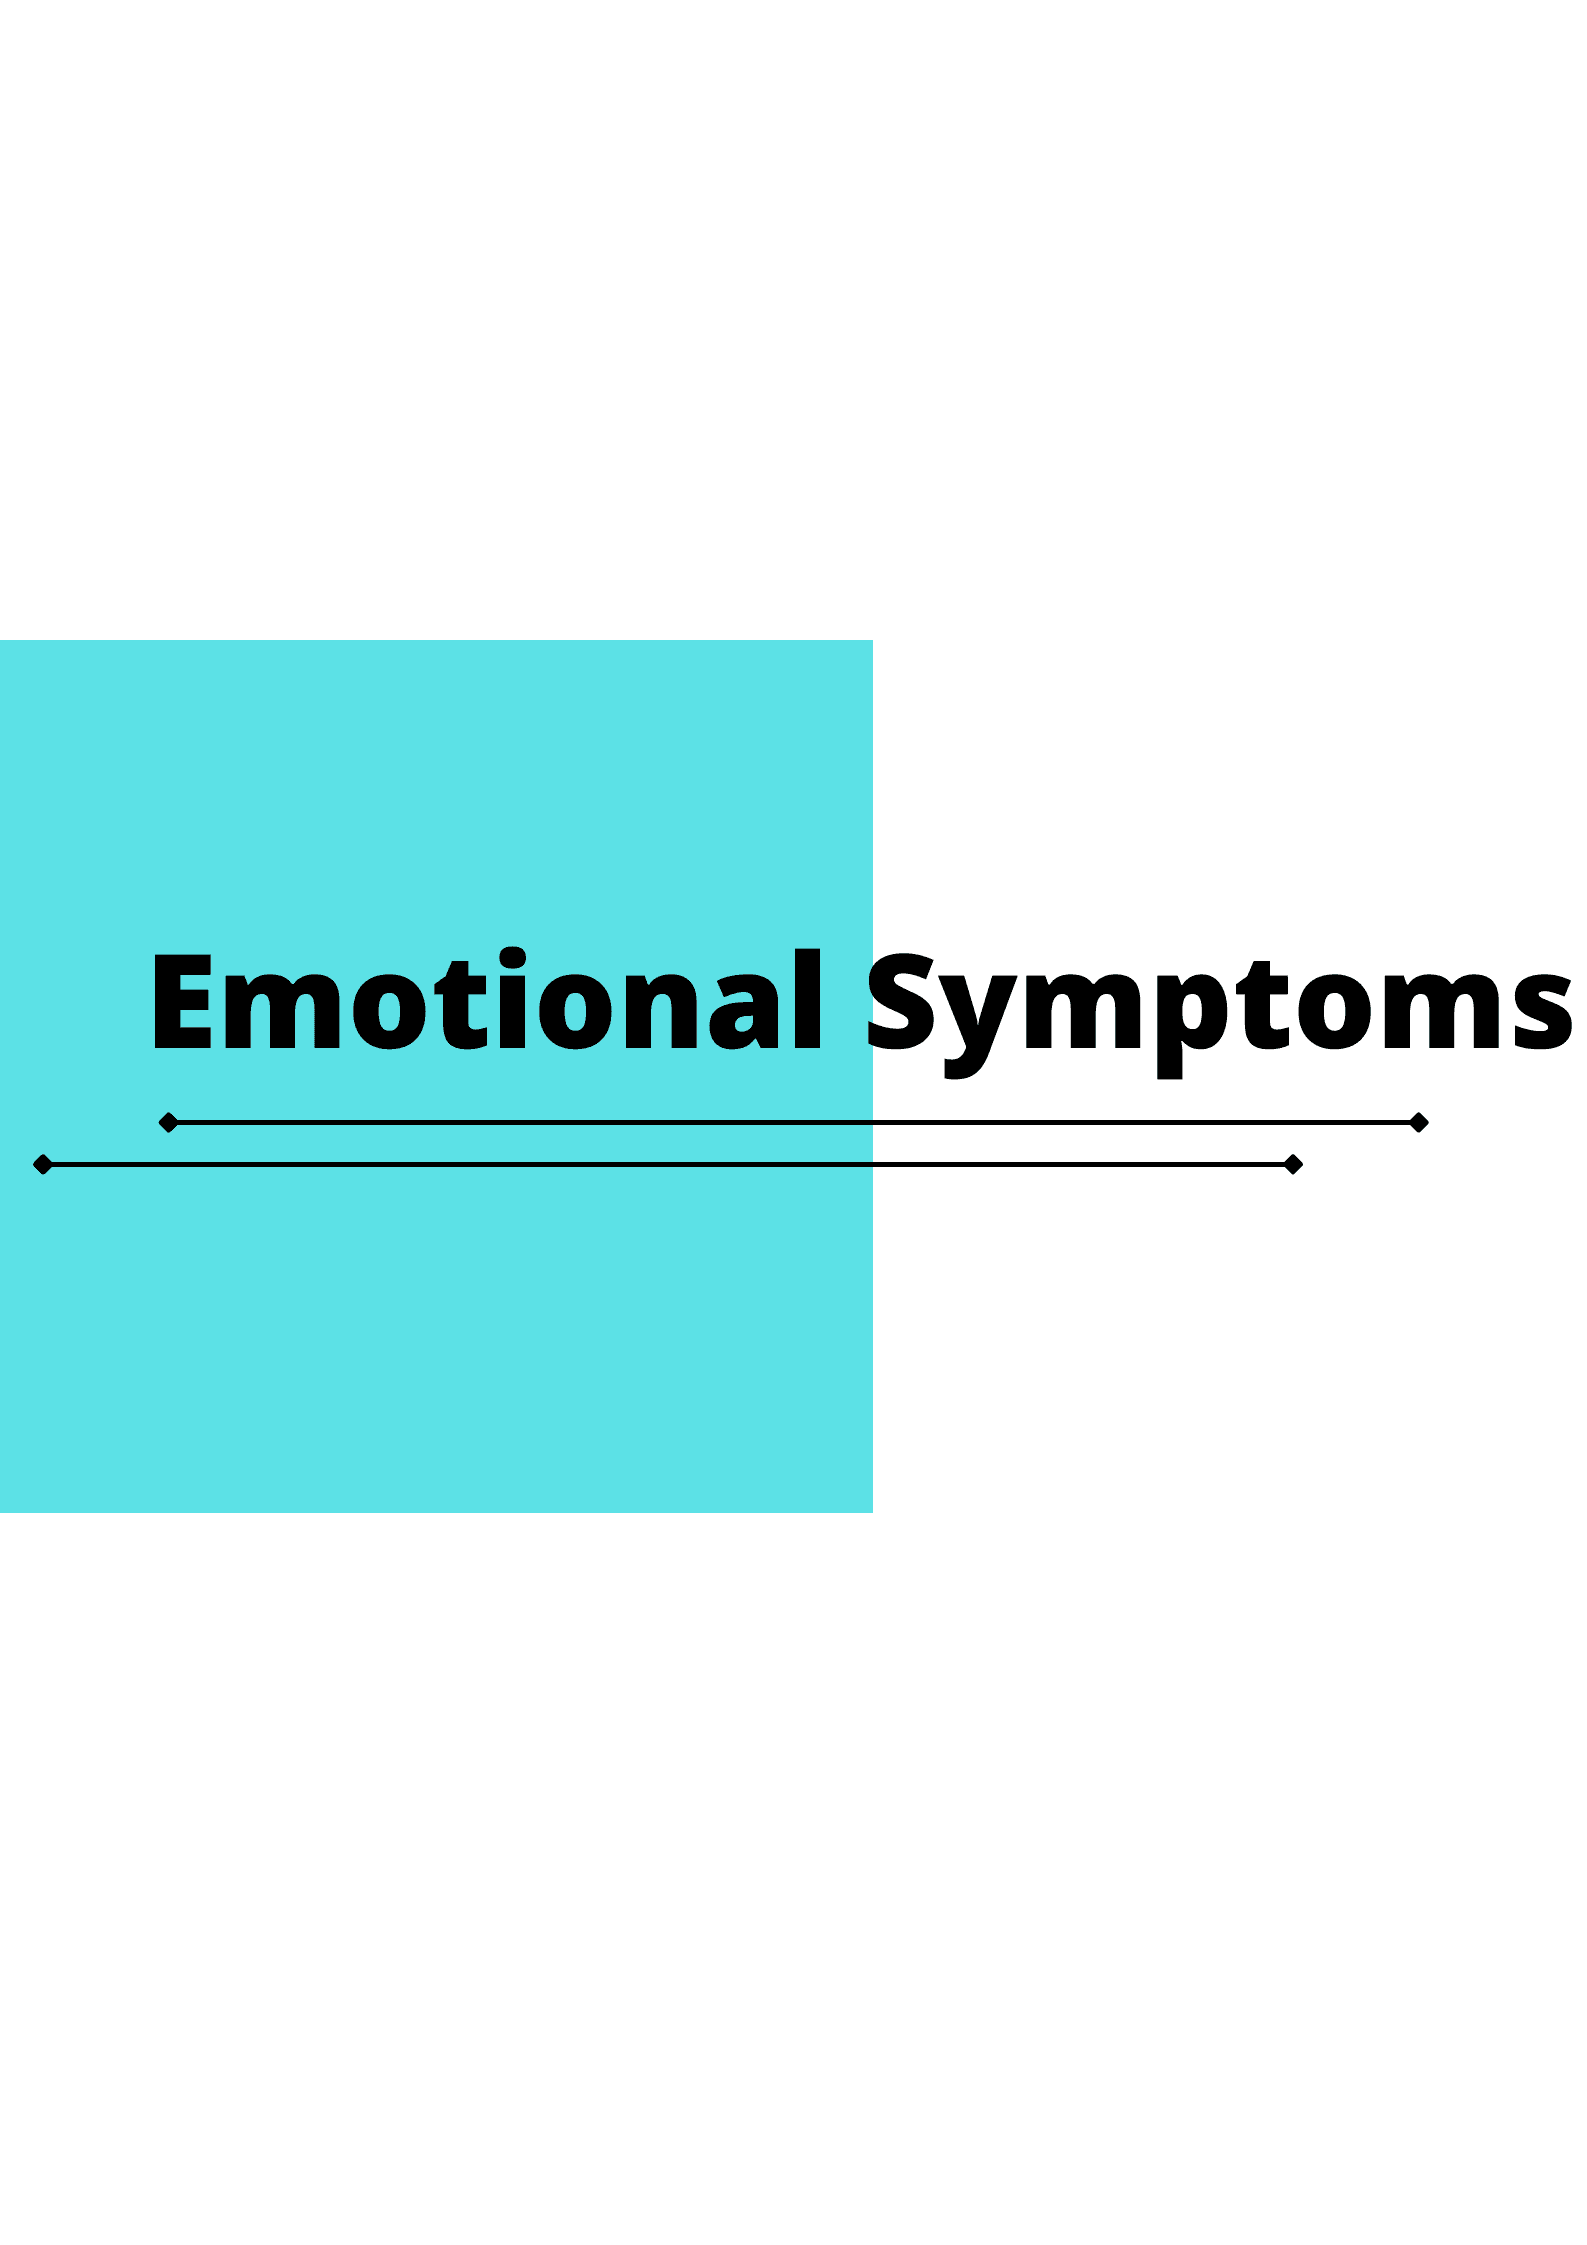 Emotion Symptoms: